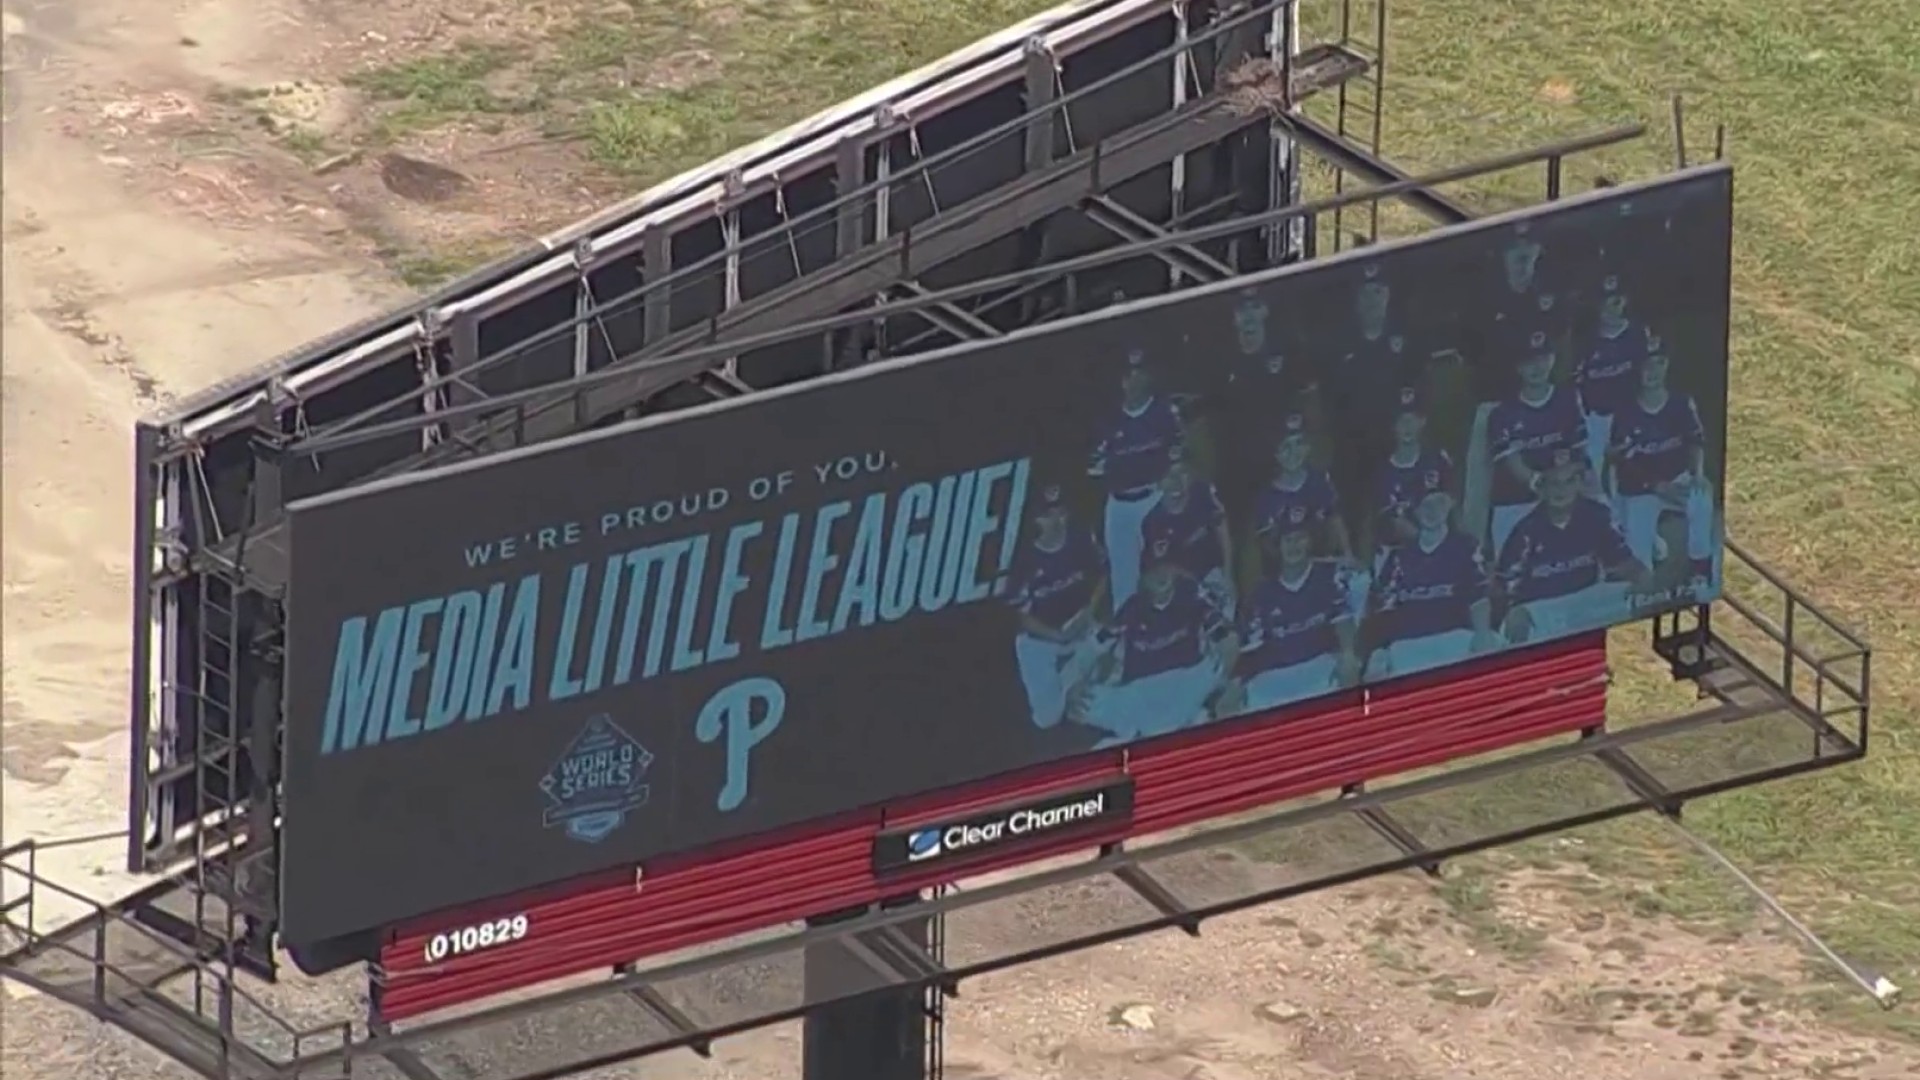 Media Little League team returns home amid support from region – NBC10  Philadelphia